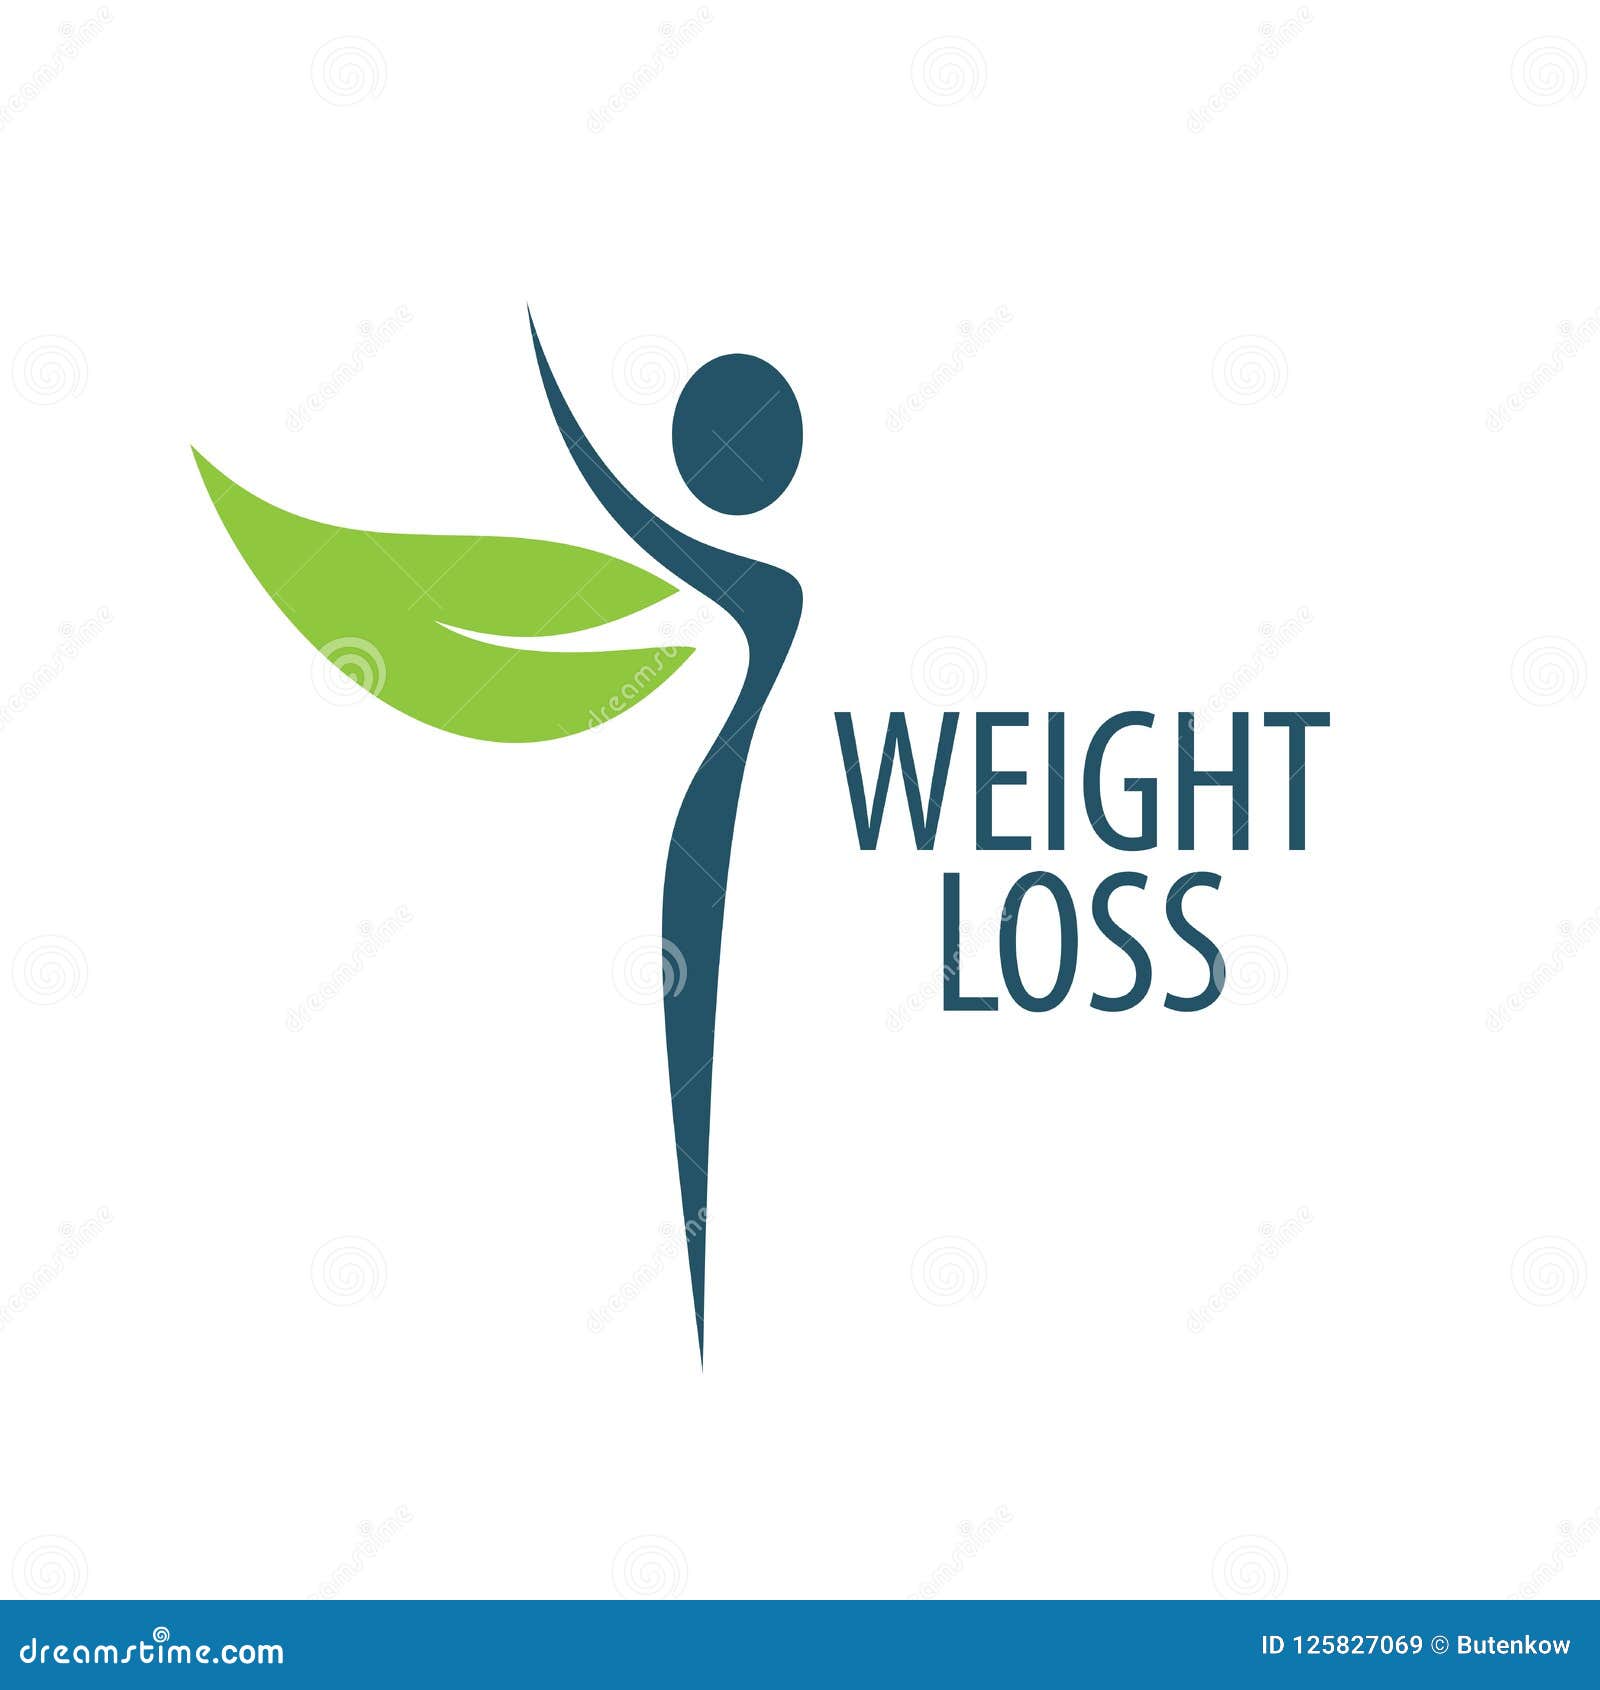 weight loss logo ideas 4